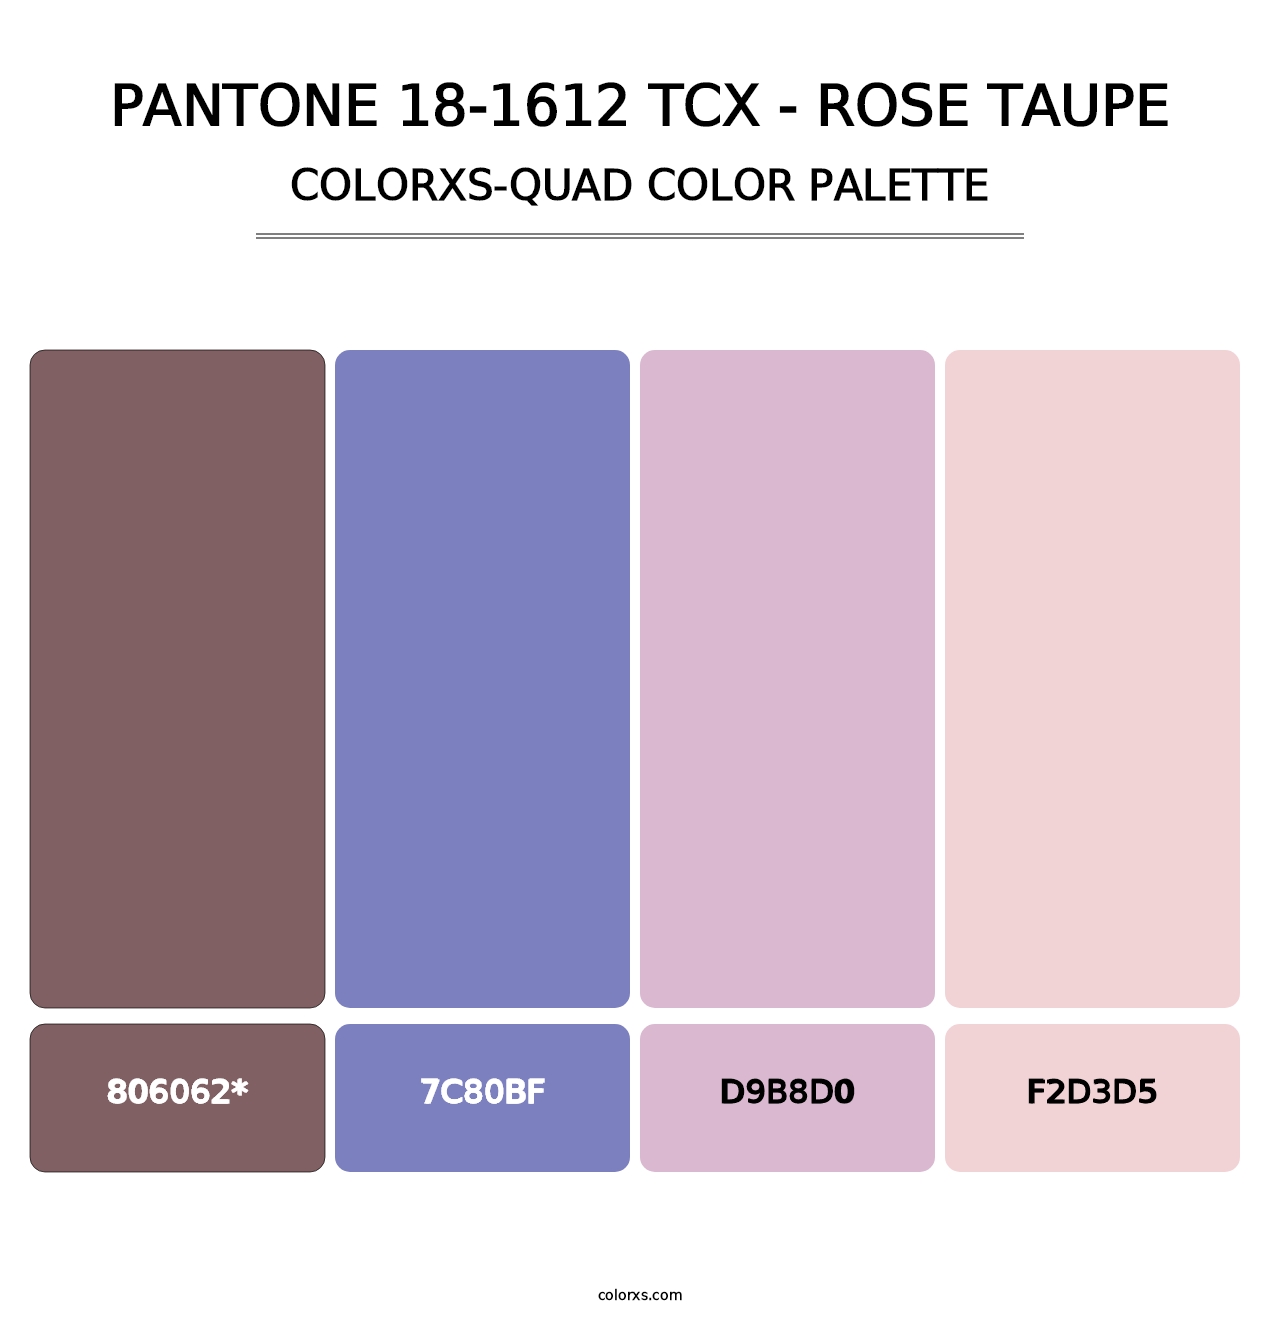 PANTONE 18-1612 TCX - Rose Taupe - Colorxs Quad Palette